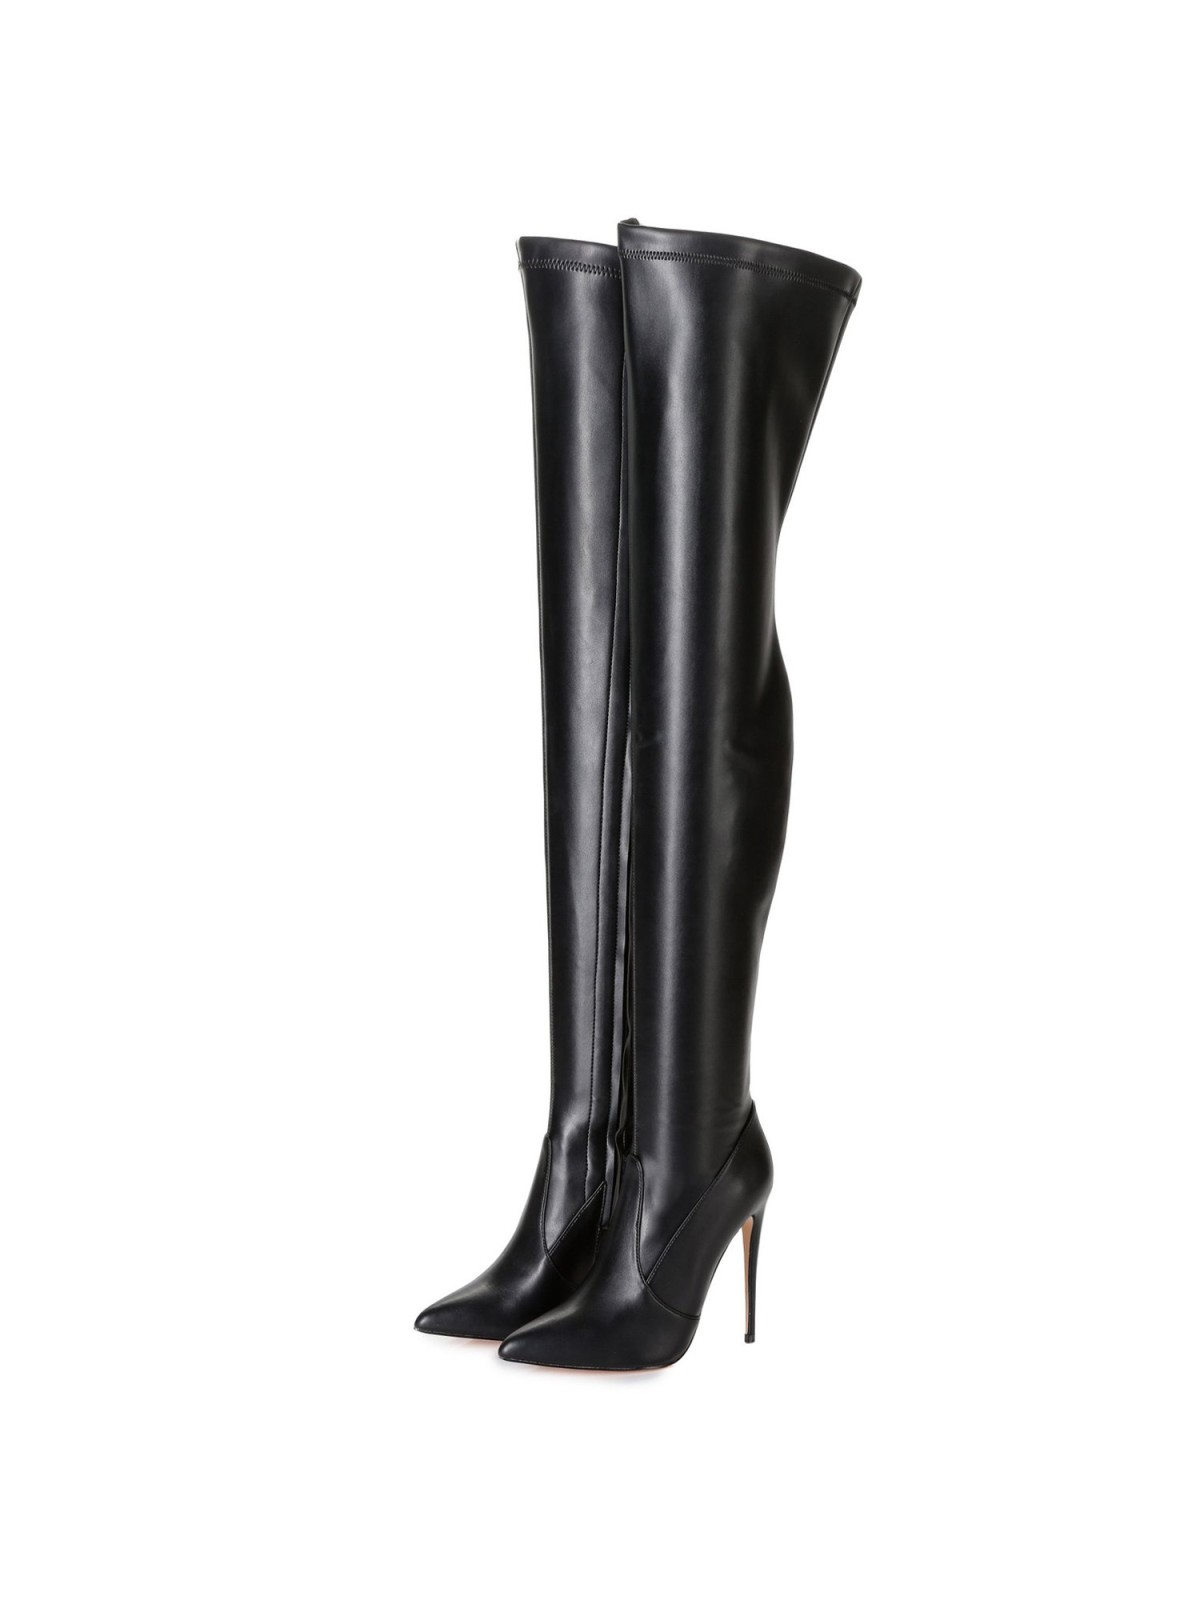 Giaro ARABELLA black over-the-knee boots on high heel